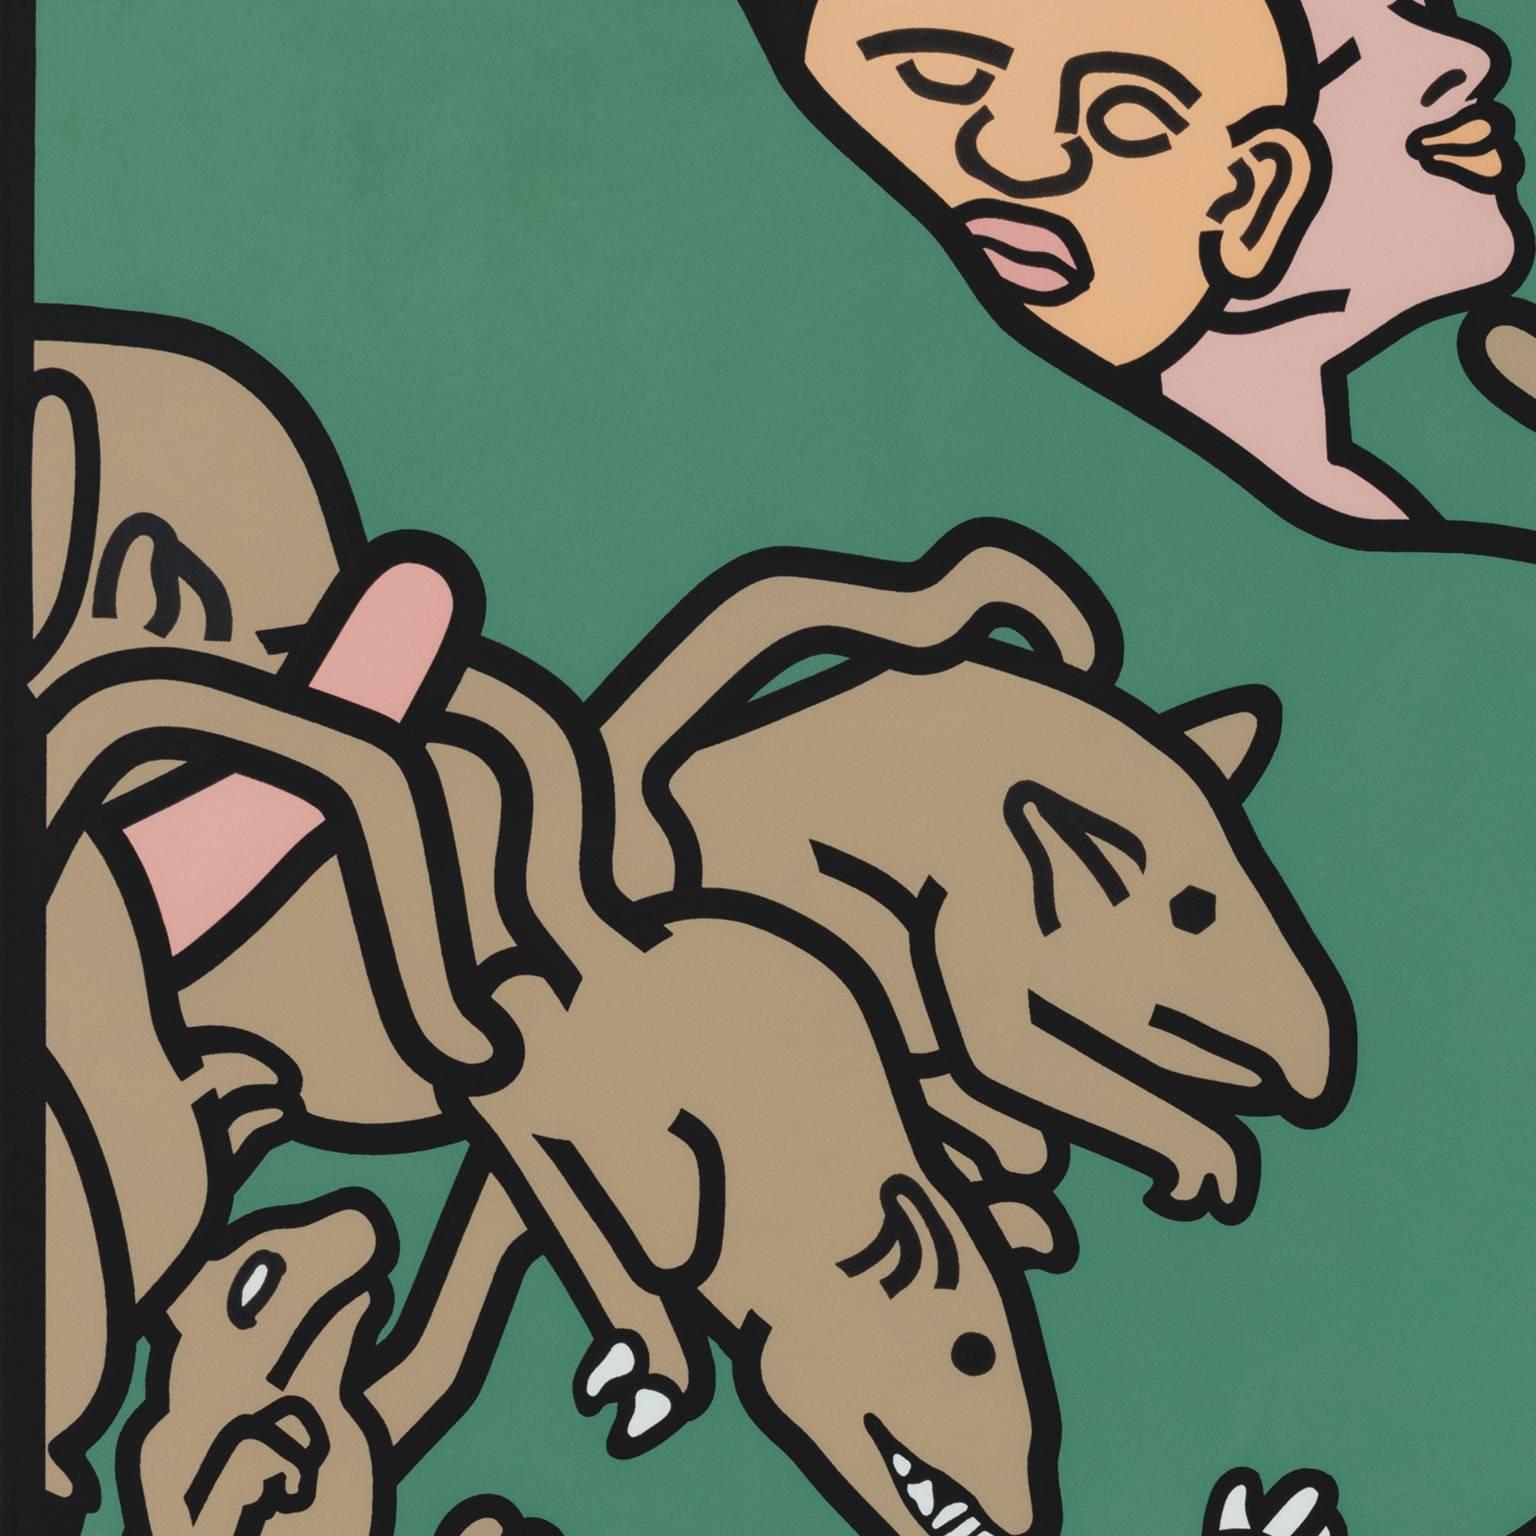 The Rats - Print by Bernard Aptekar